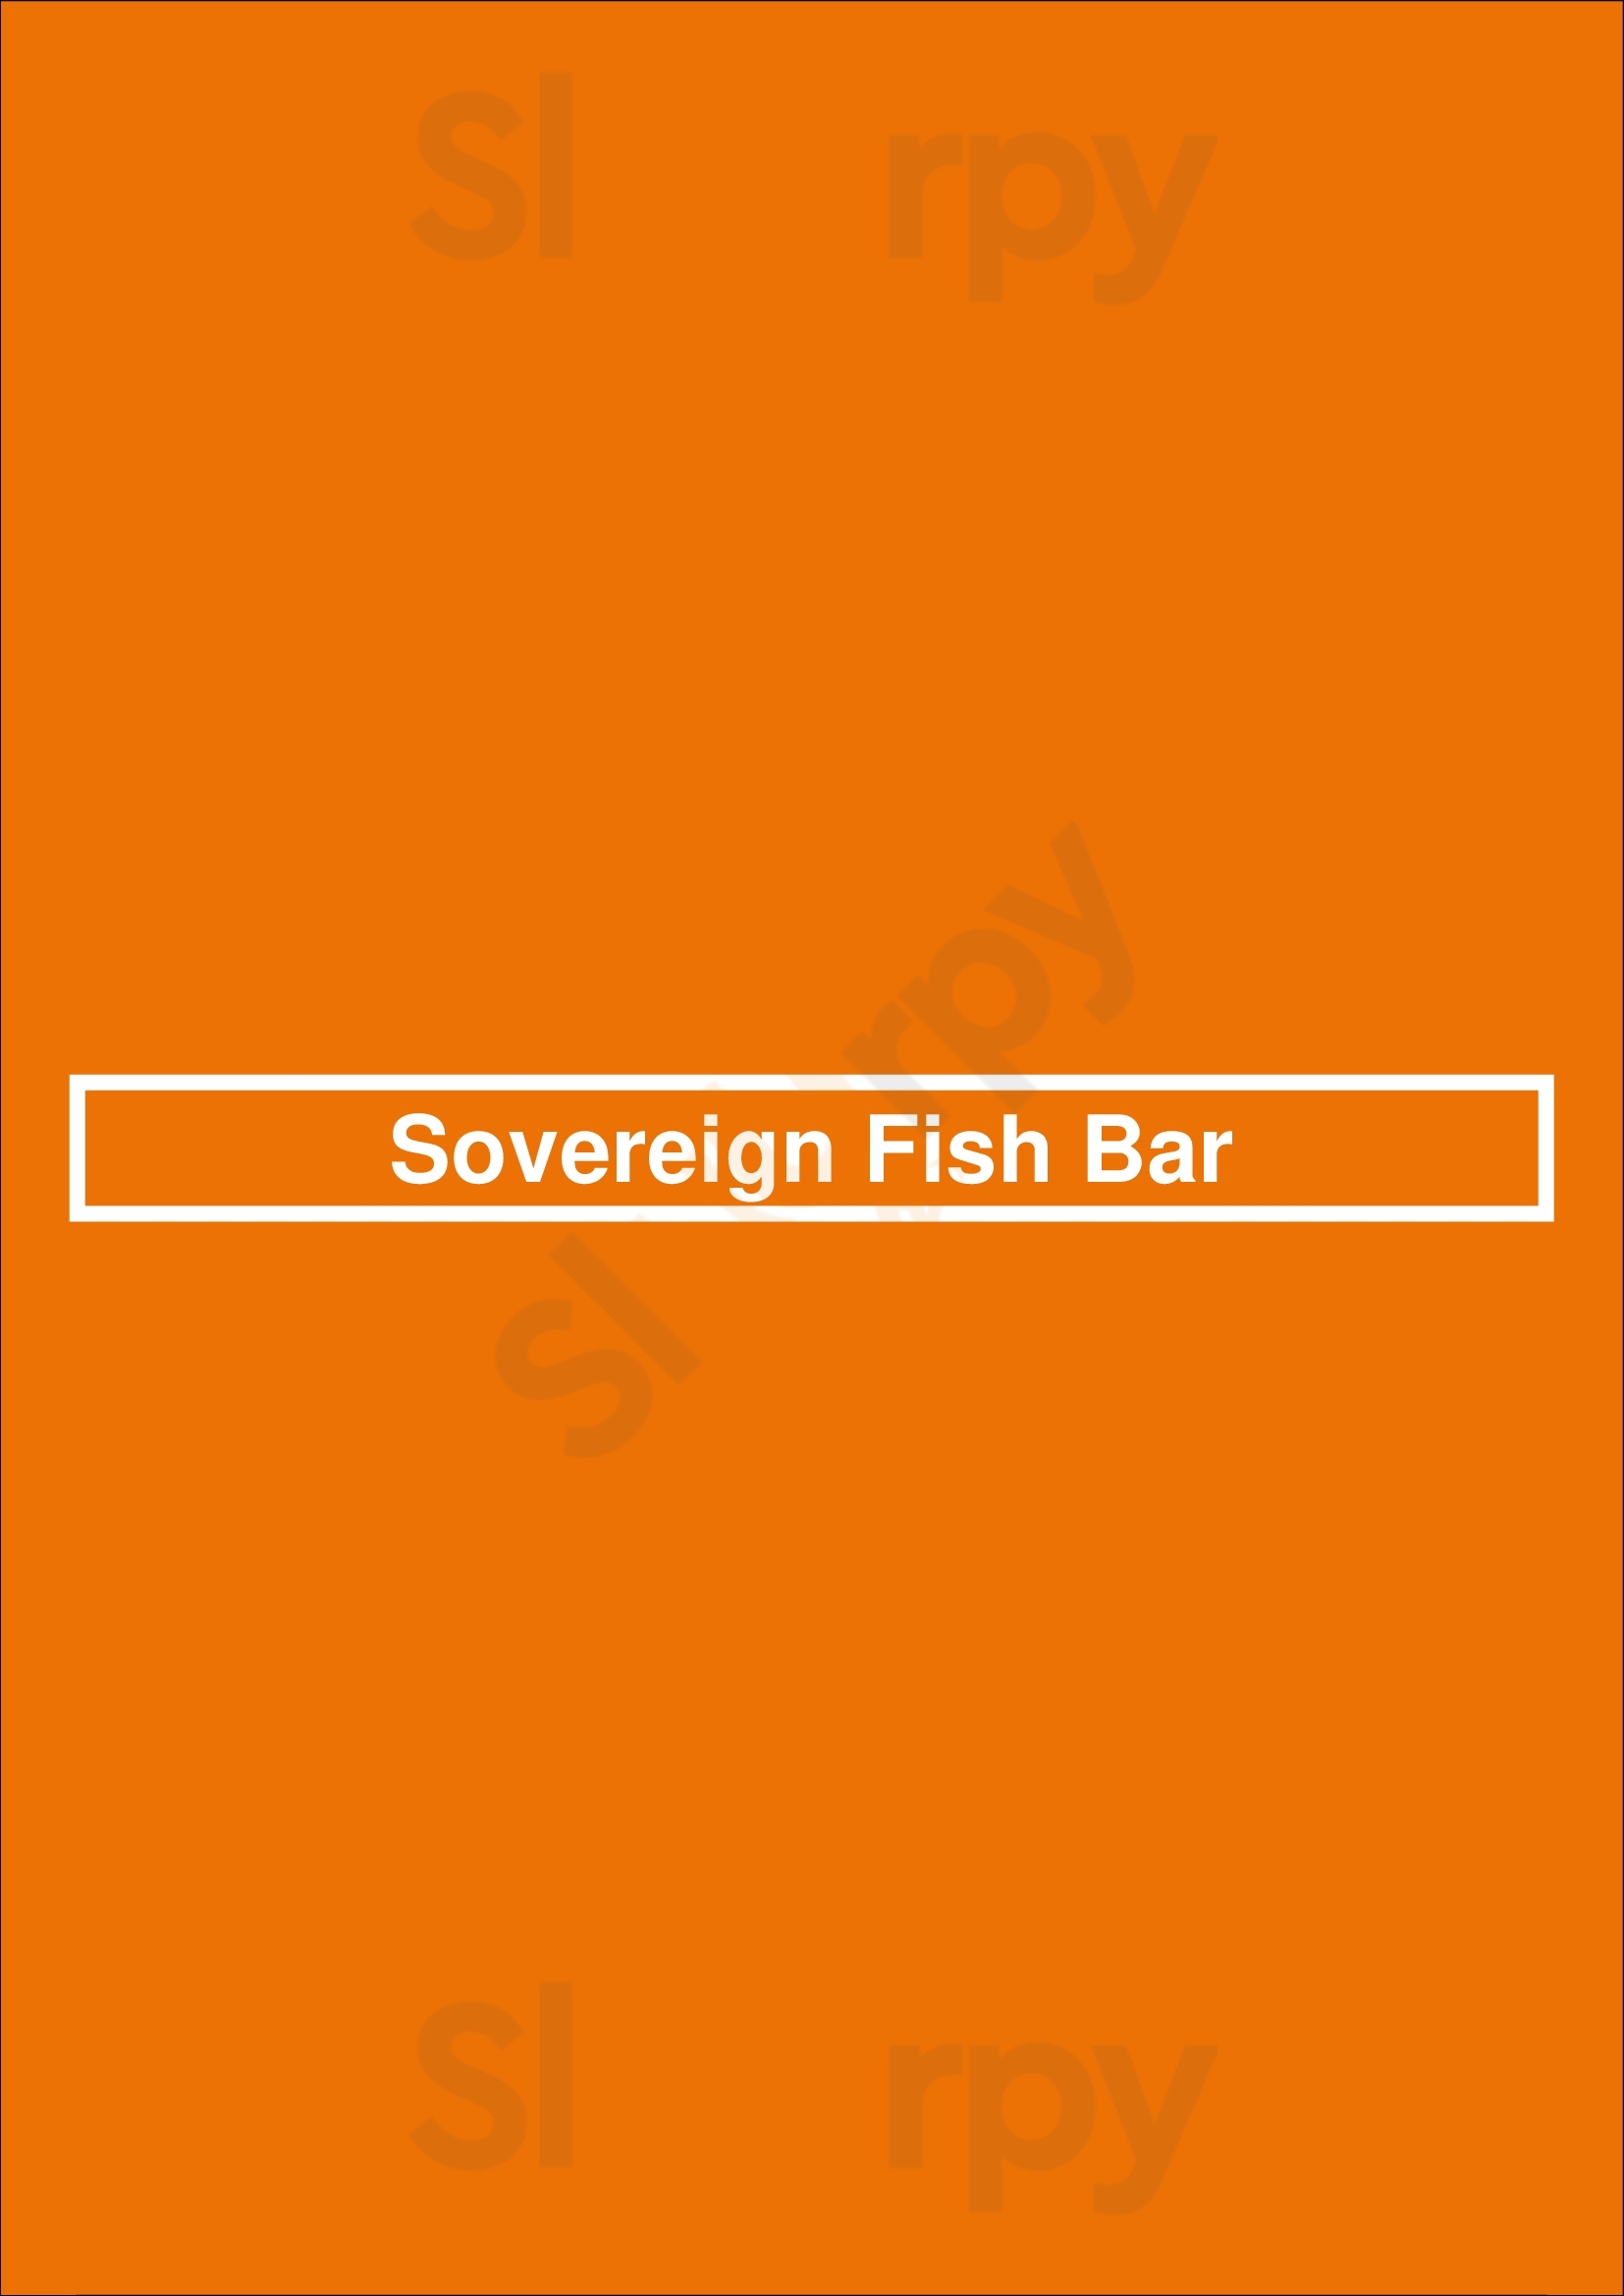 Sovereign Fish Bar Eastbourne Menu - 1